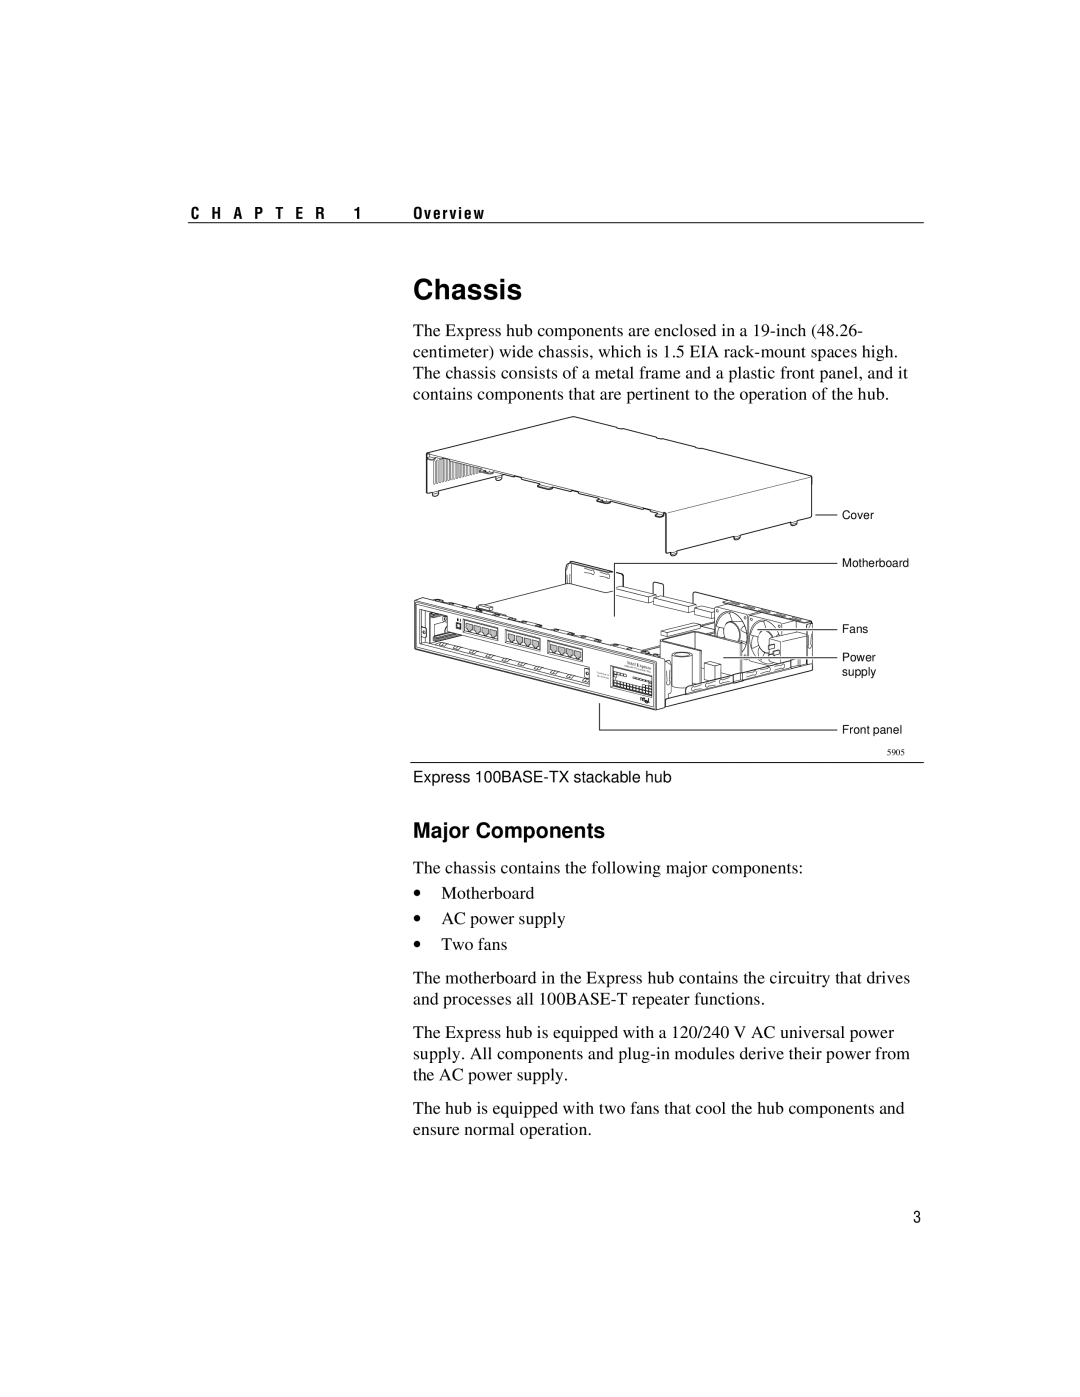 Intel 100BASE-TX manual Chassis, Major Components 